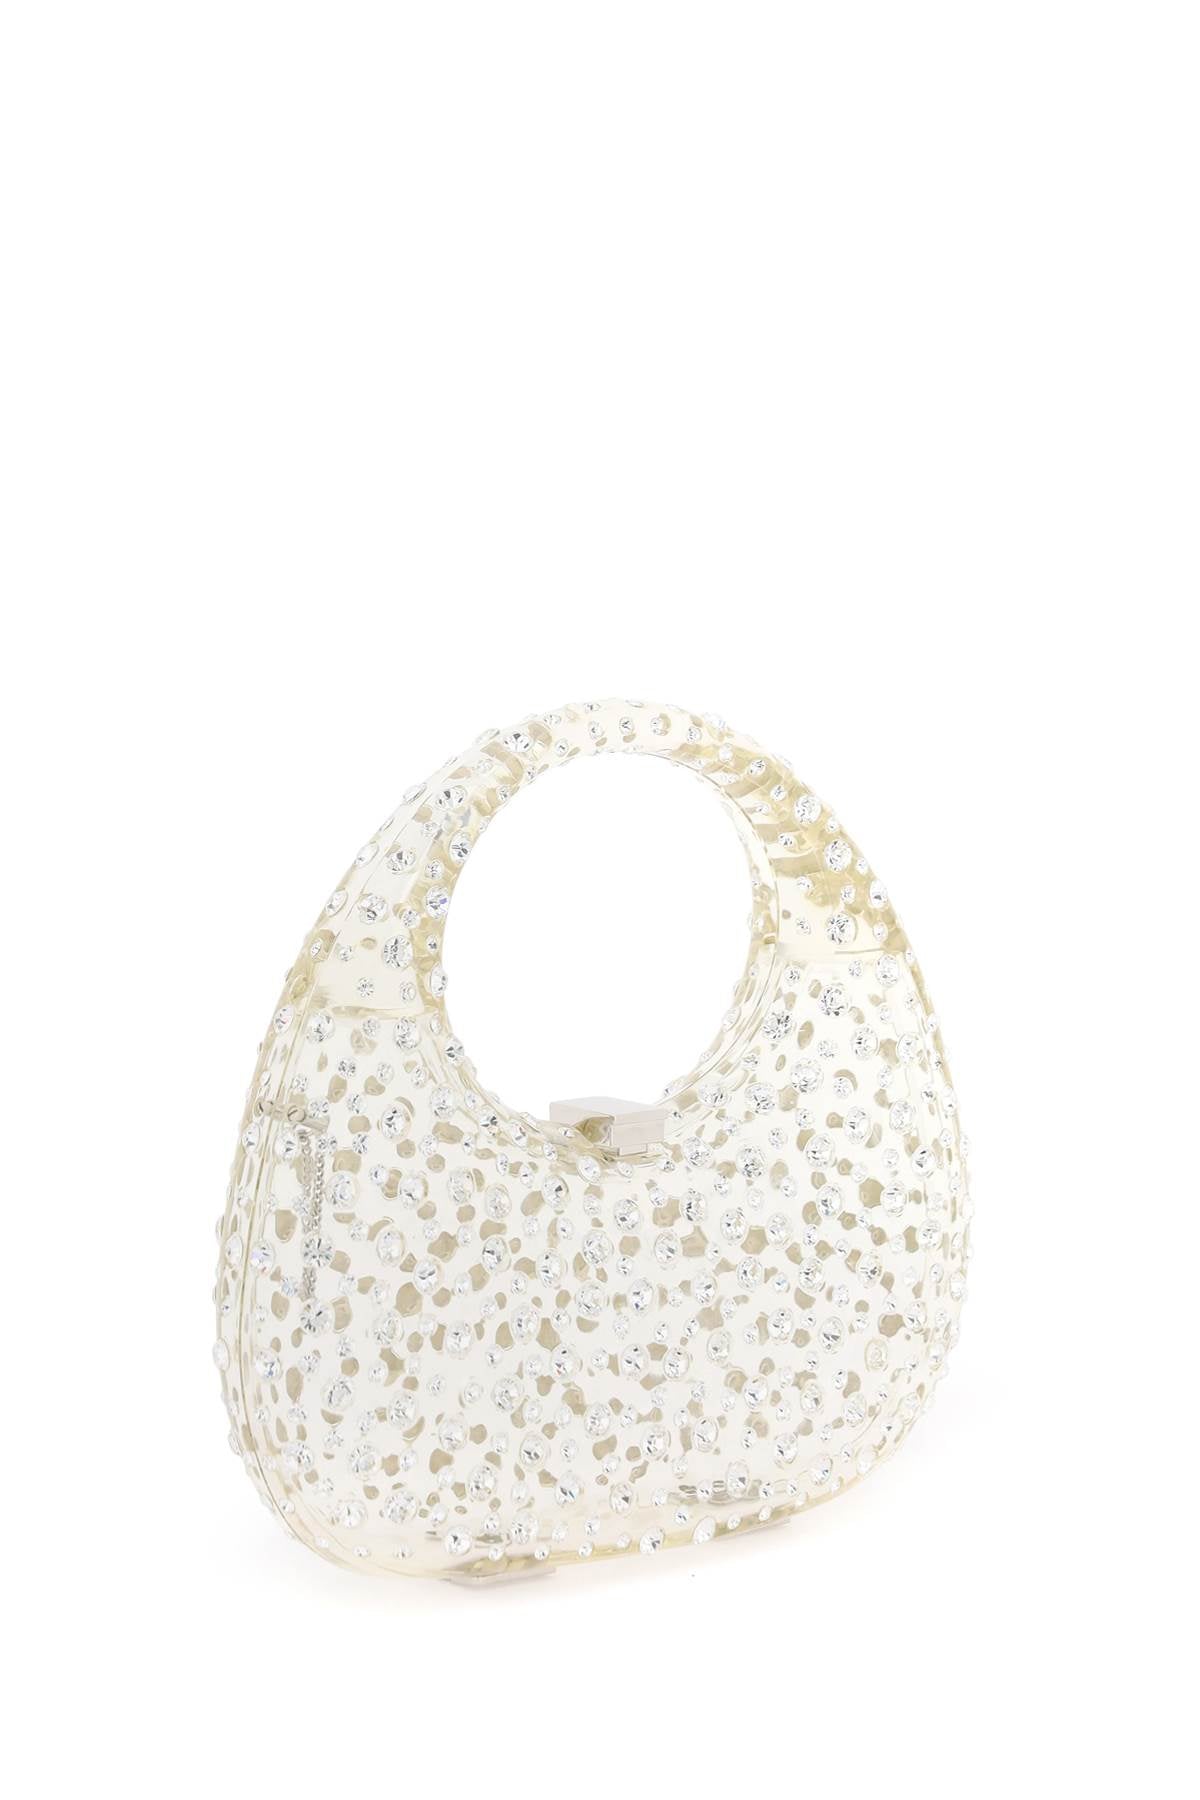 L'ALINGI Stunning Crystal-Embellished Handbag for Women